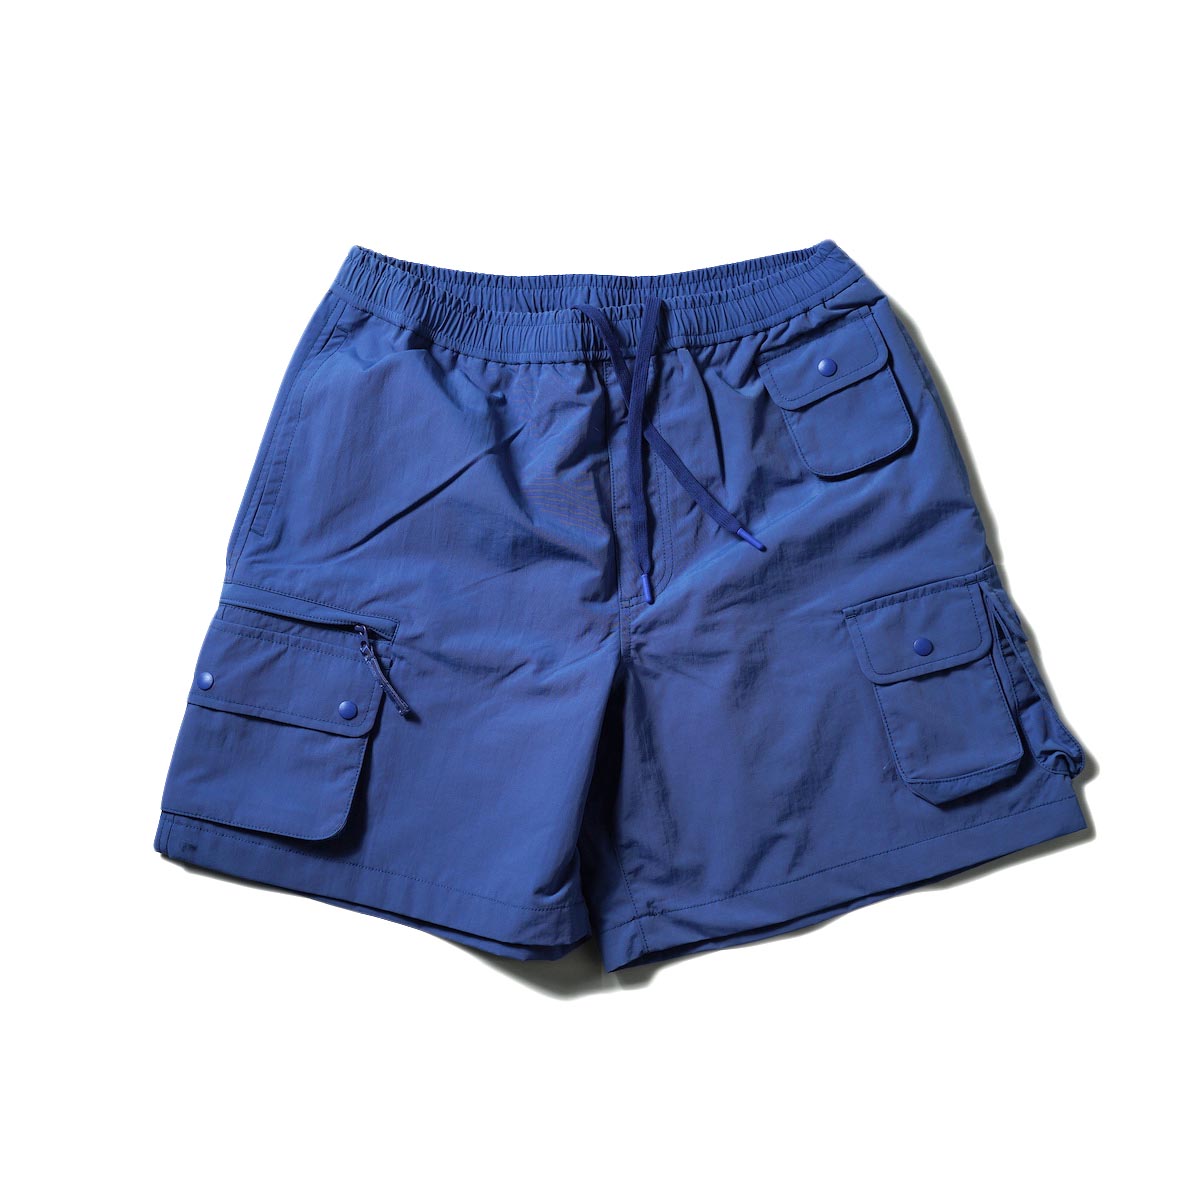 DAIWA PIER39 / Tech Hiker Mountain Shorts (Royal Blue)